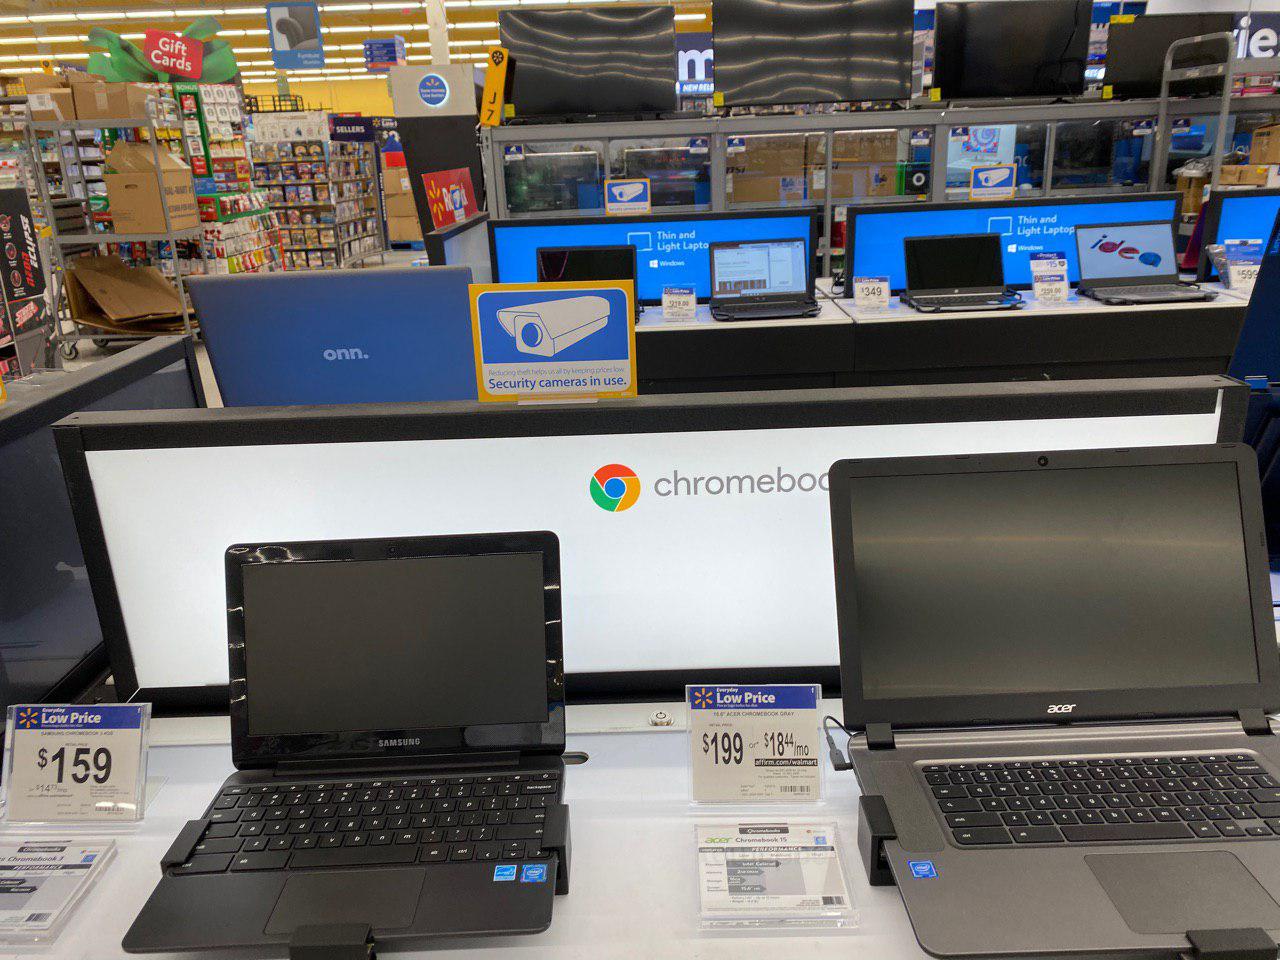 Chromebook Black Friday Deals at Walmart